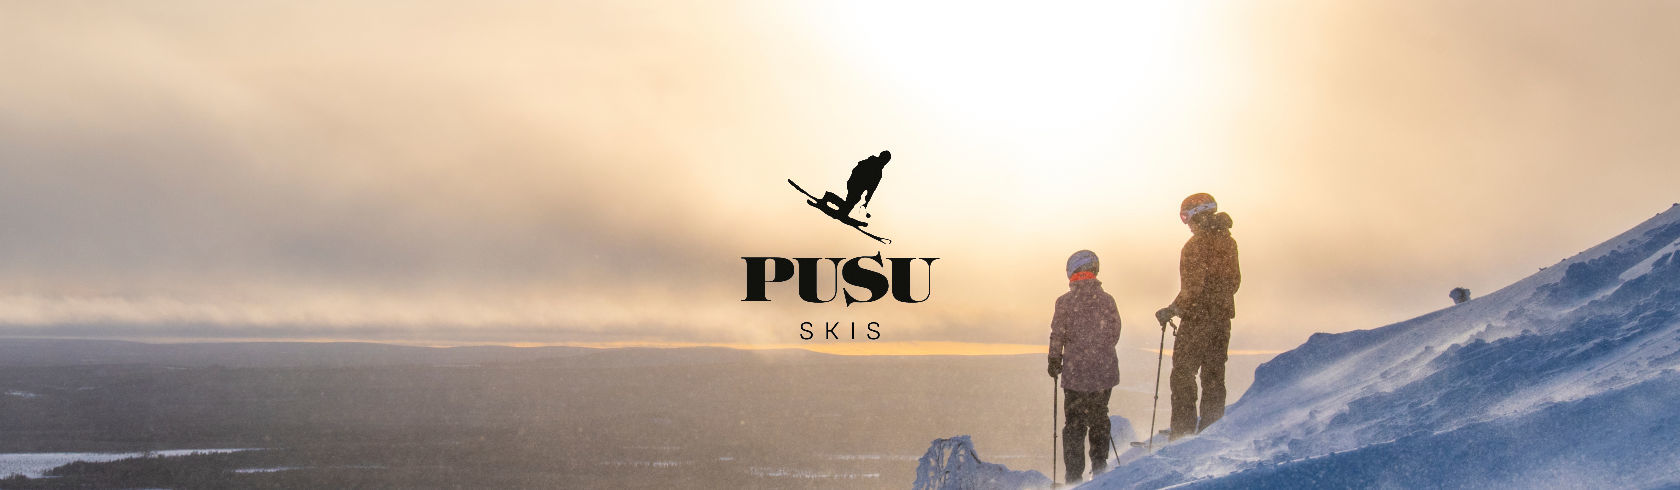 Pusu Skis Brand Banner